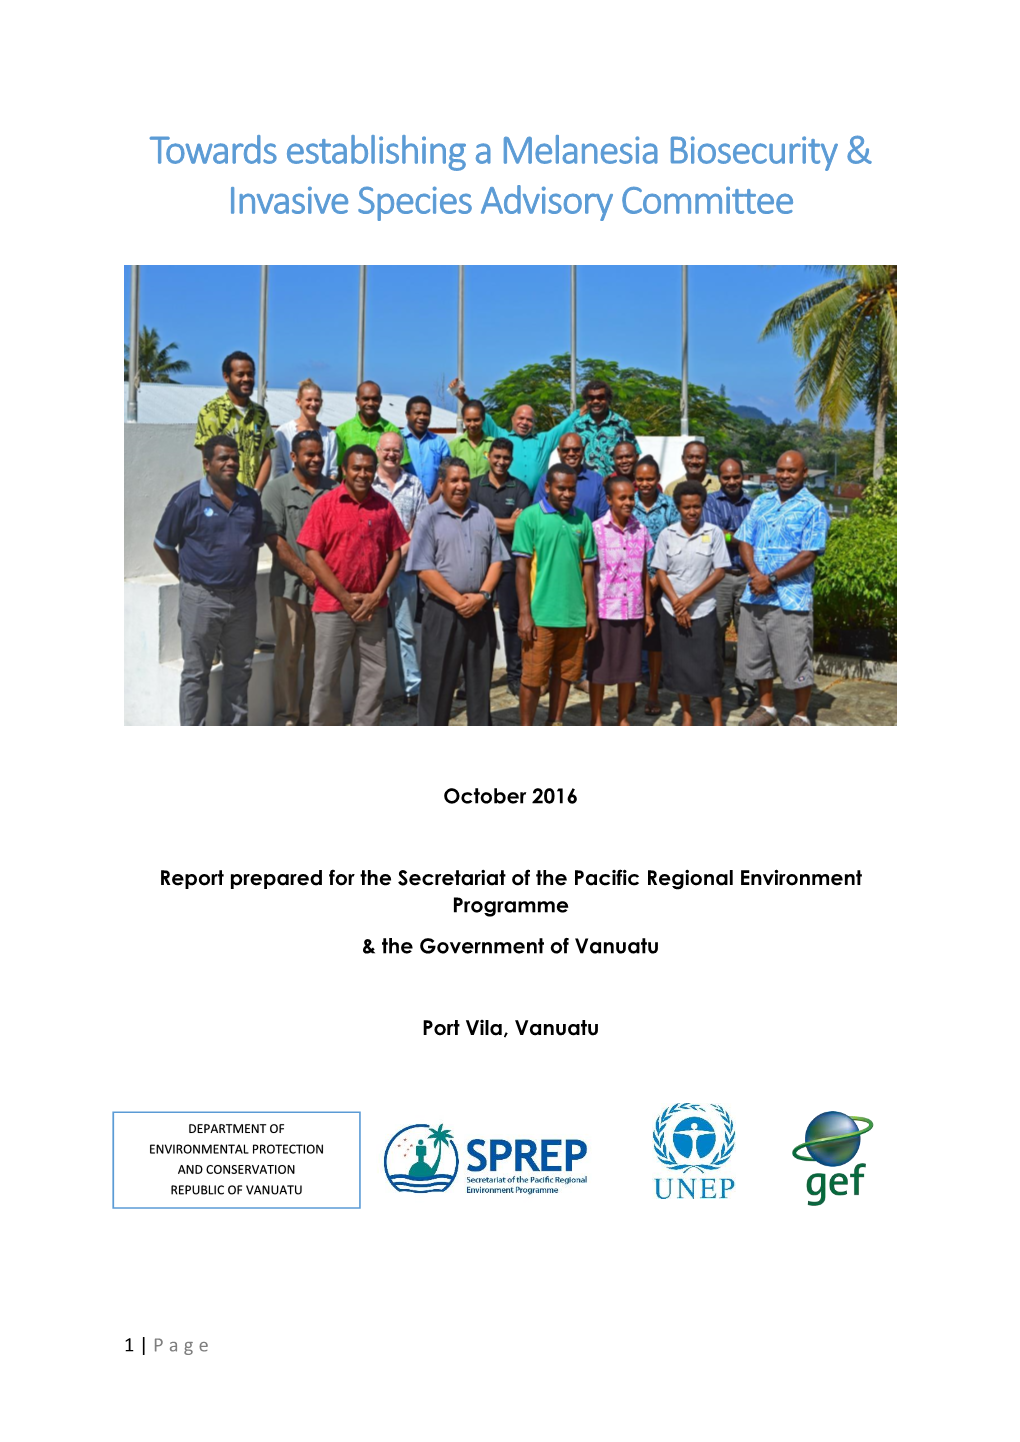 Towards Establishing a Melanesia Biosecurity & Invasive Species Advisory Committee